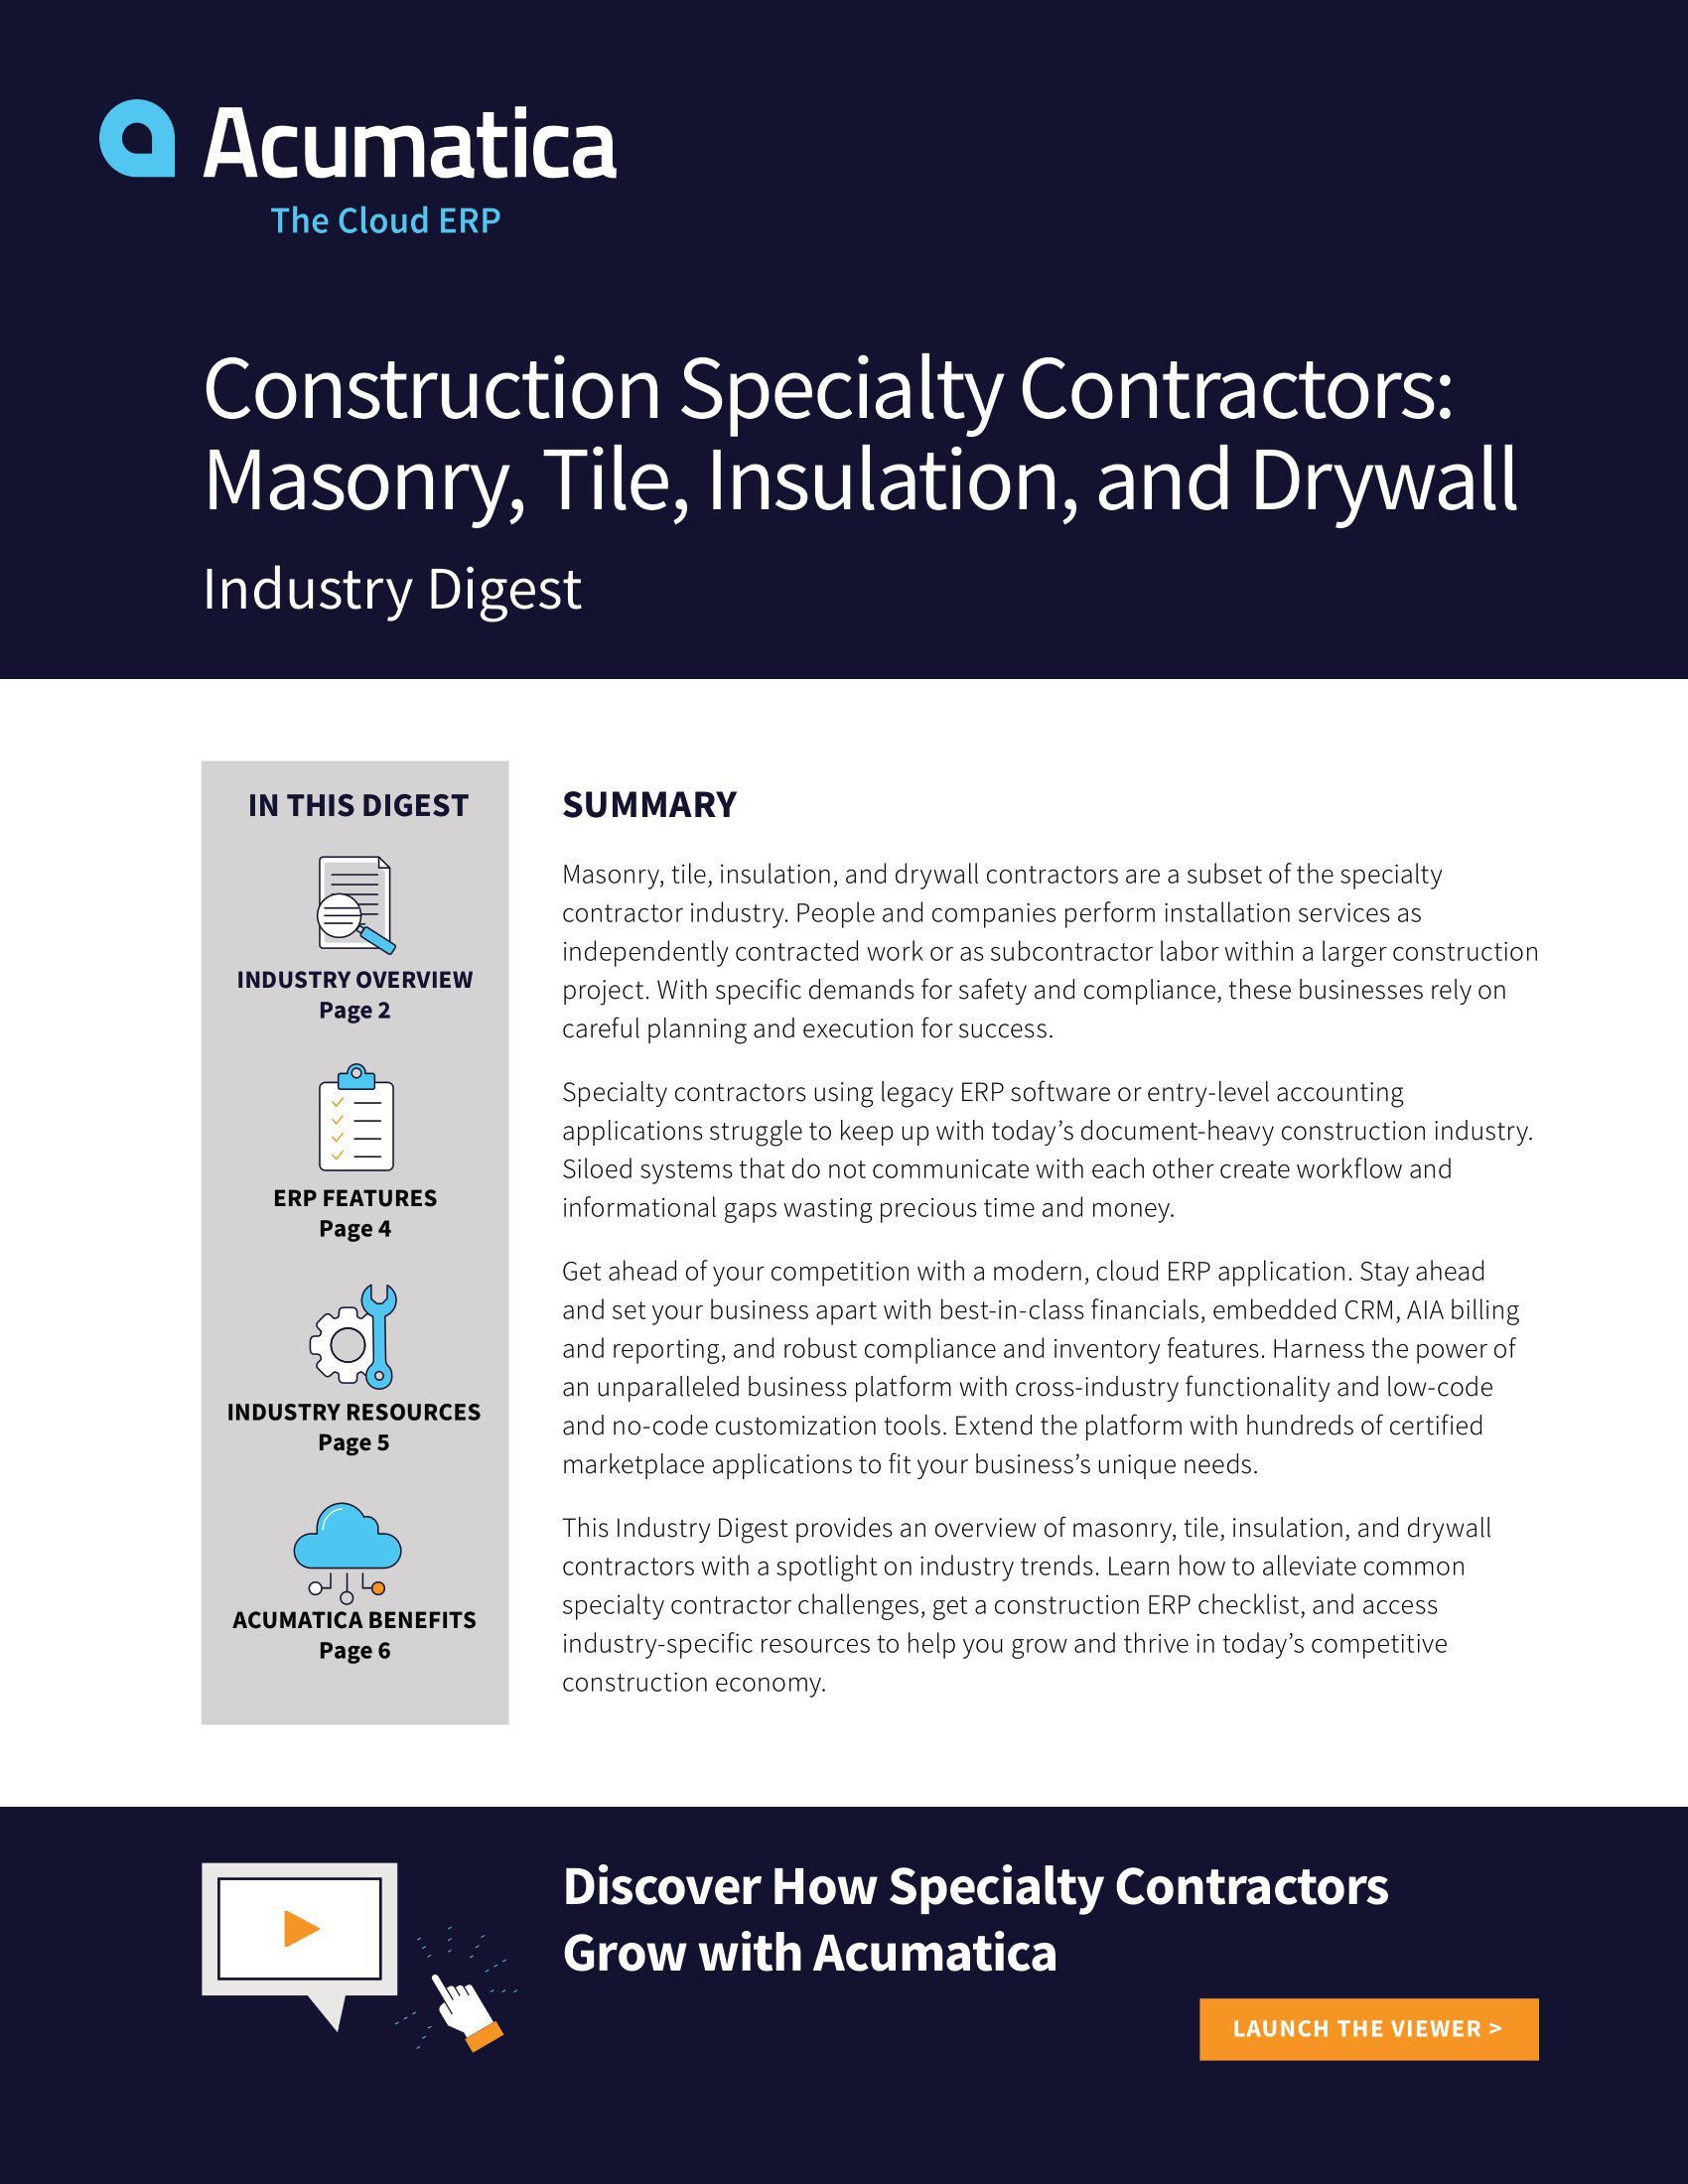 Acumatica Construction Edition: Transforming Specialty Contractor Businesses in Today’s Digital Economy